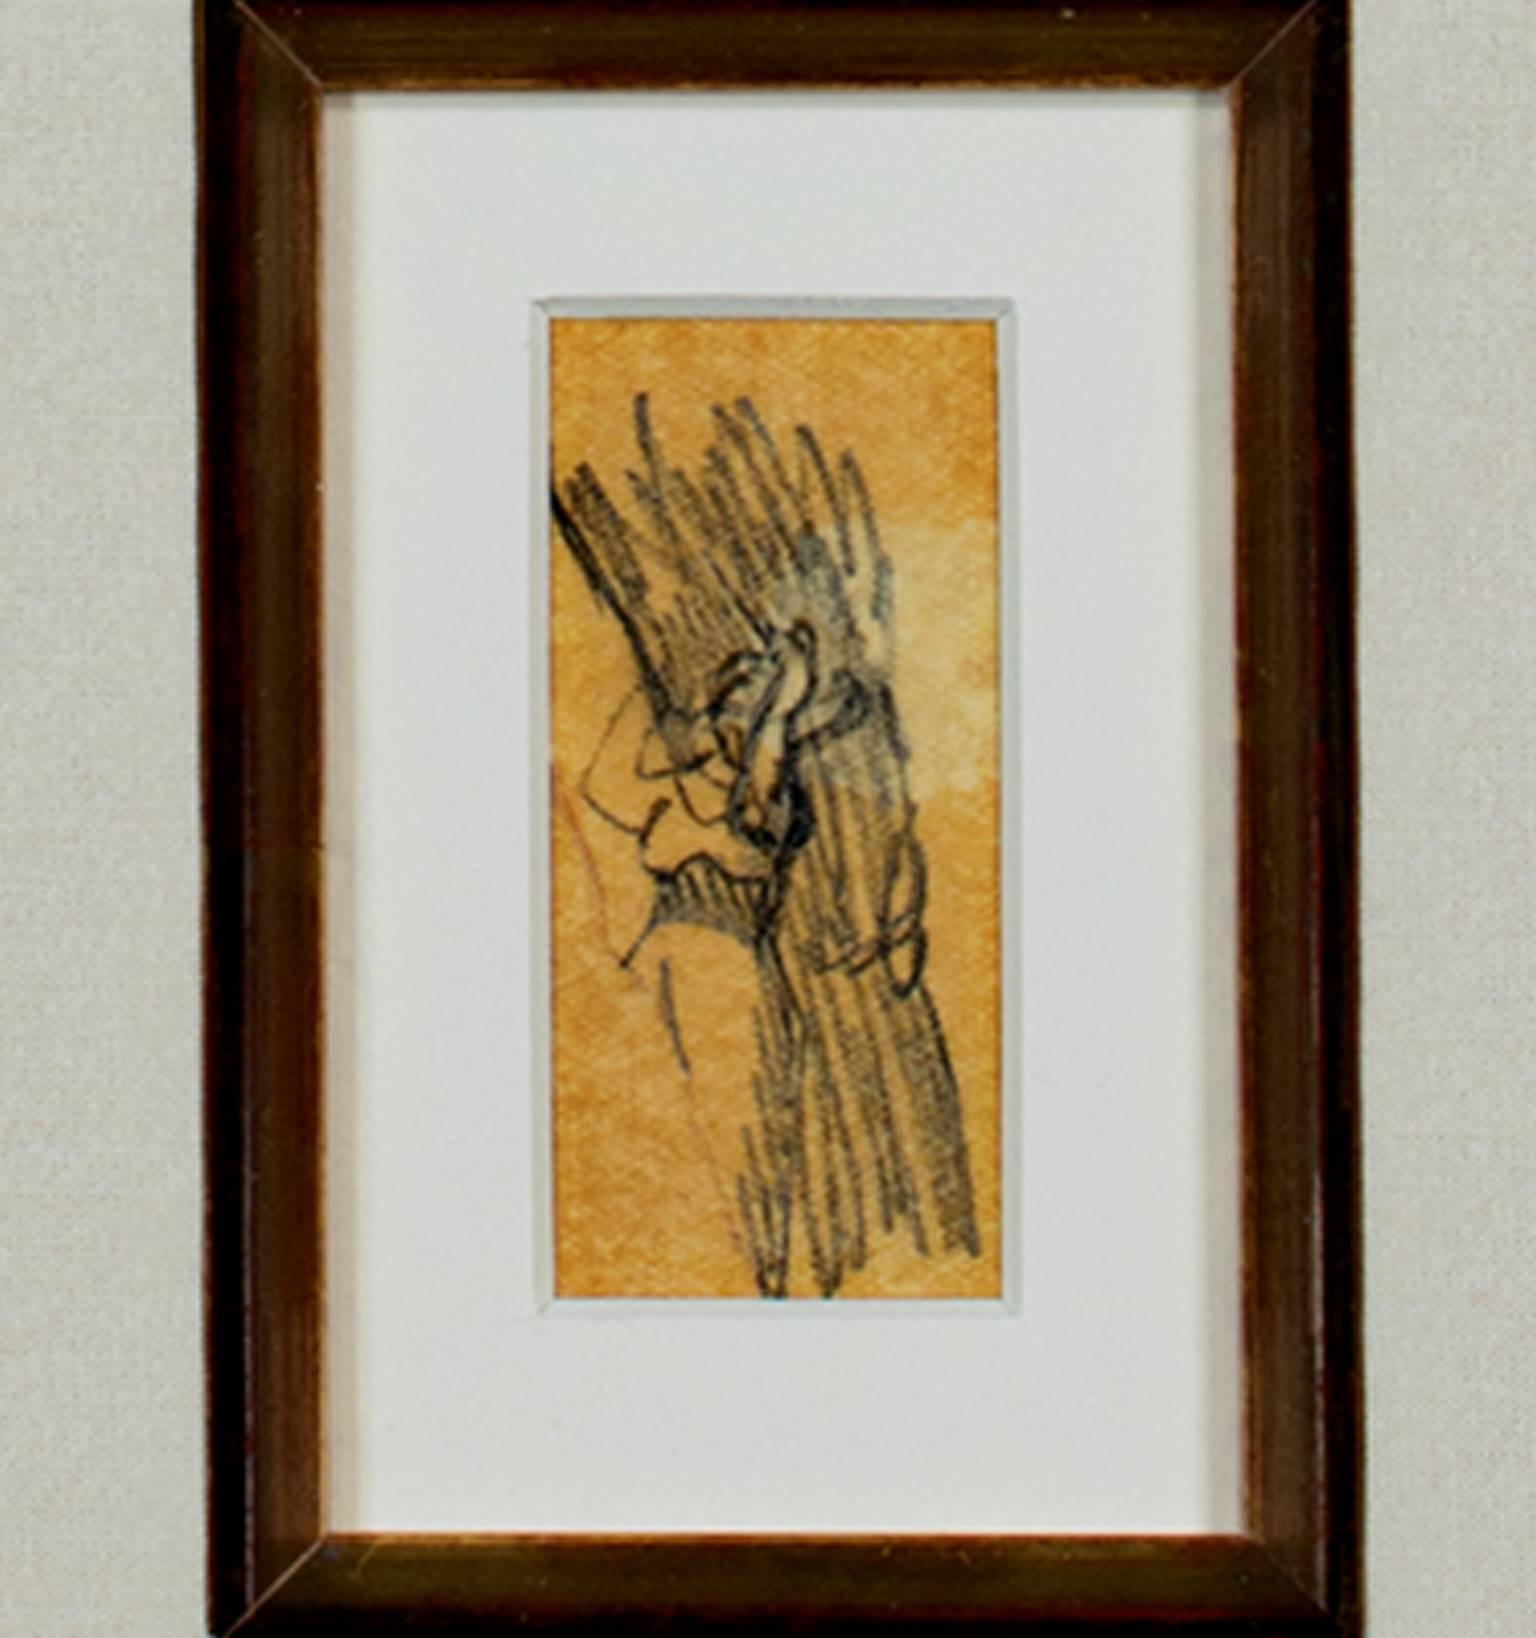 Figurative Art Ludovic-Rodo Pissarro - « Femme transportant des branches de bois », dessin au crayon sur papier de Ludovic Rodo Pissarro